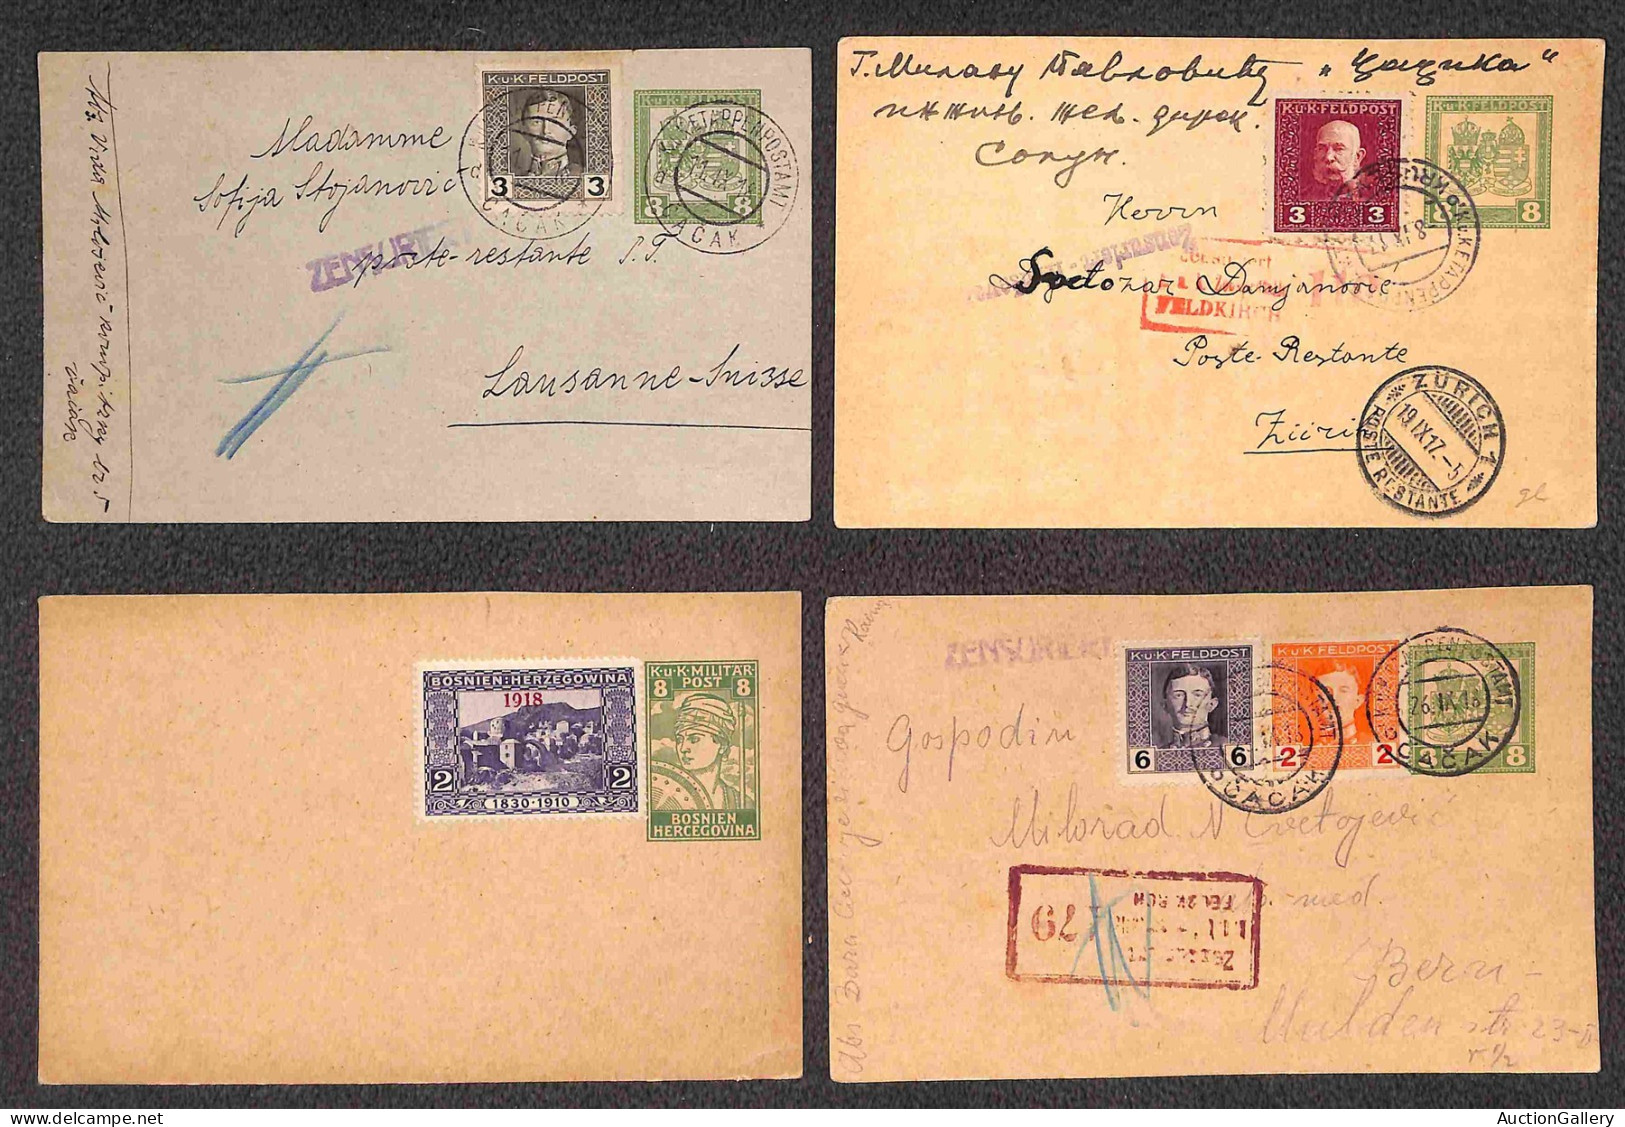 Europa - Austria - K.U.K. Feldpost + Bosnia/Erzegovina - 16 cartoline postali (2 nuove) + 2 cartoline + 2 raccomandate c